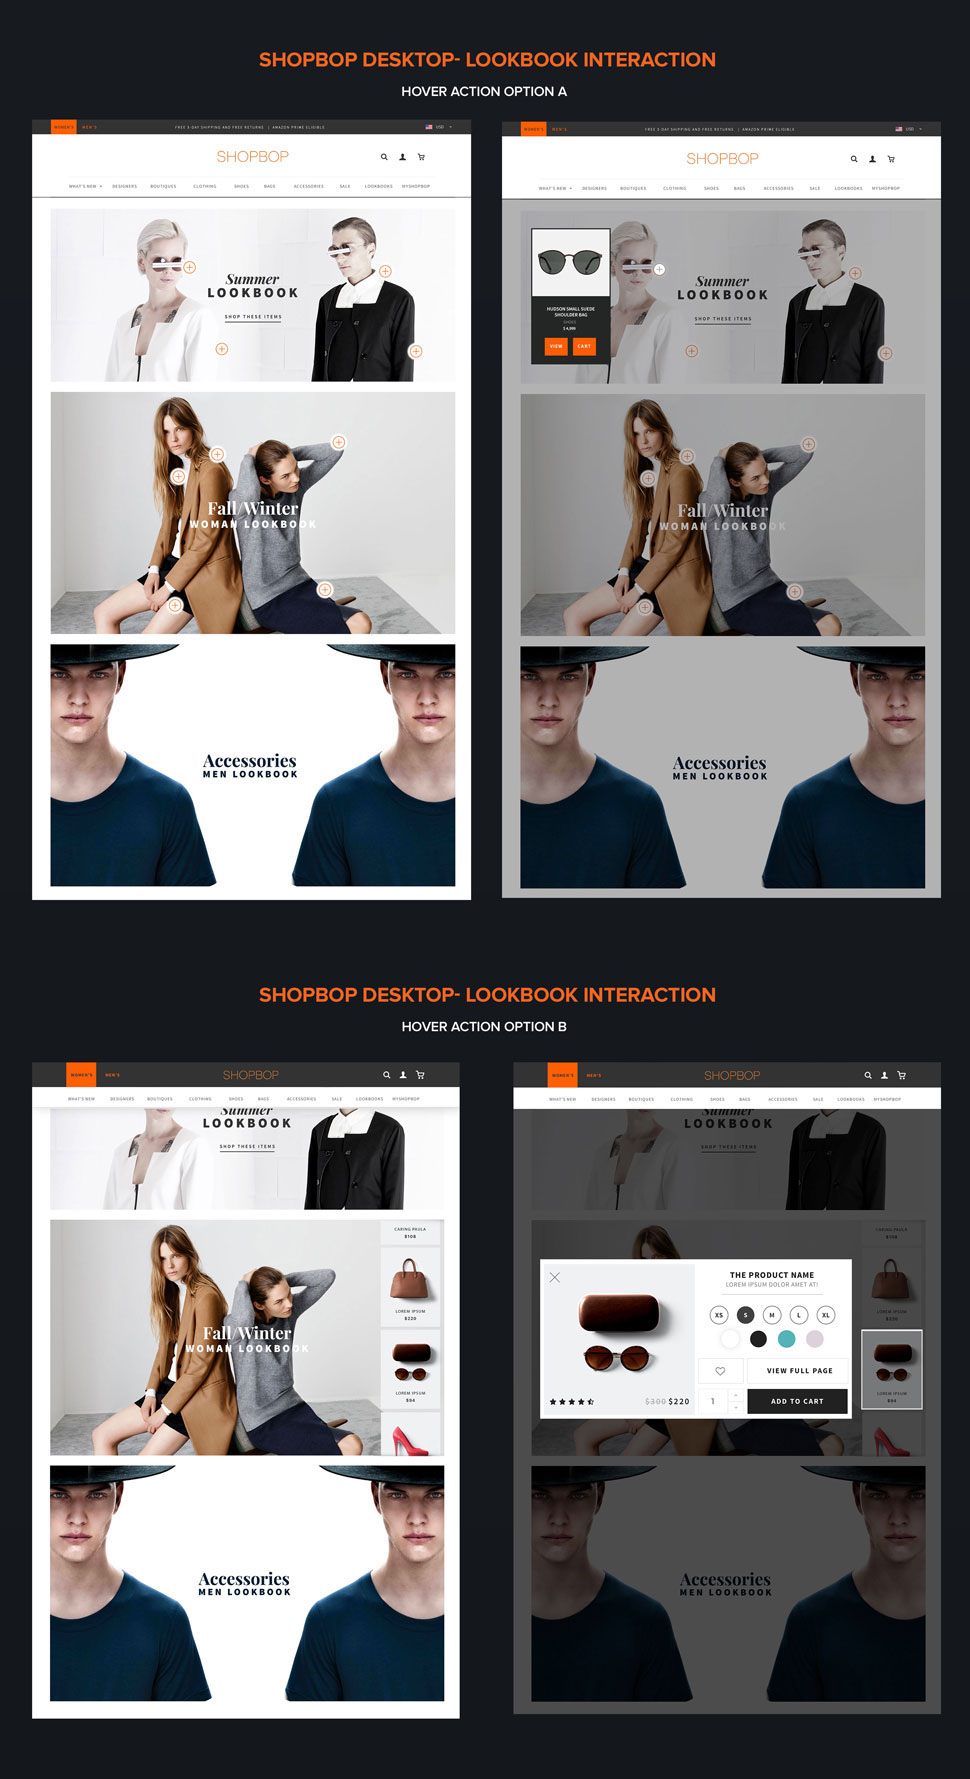 Adobe Portfolio shopbop e-commerce re-design ux UI shopbop amazon Amazon